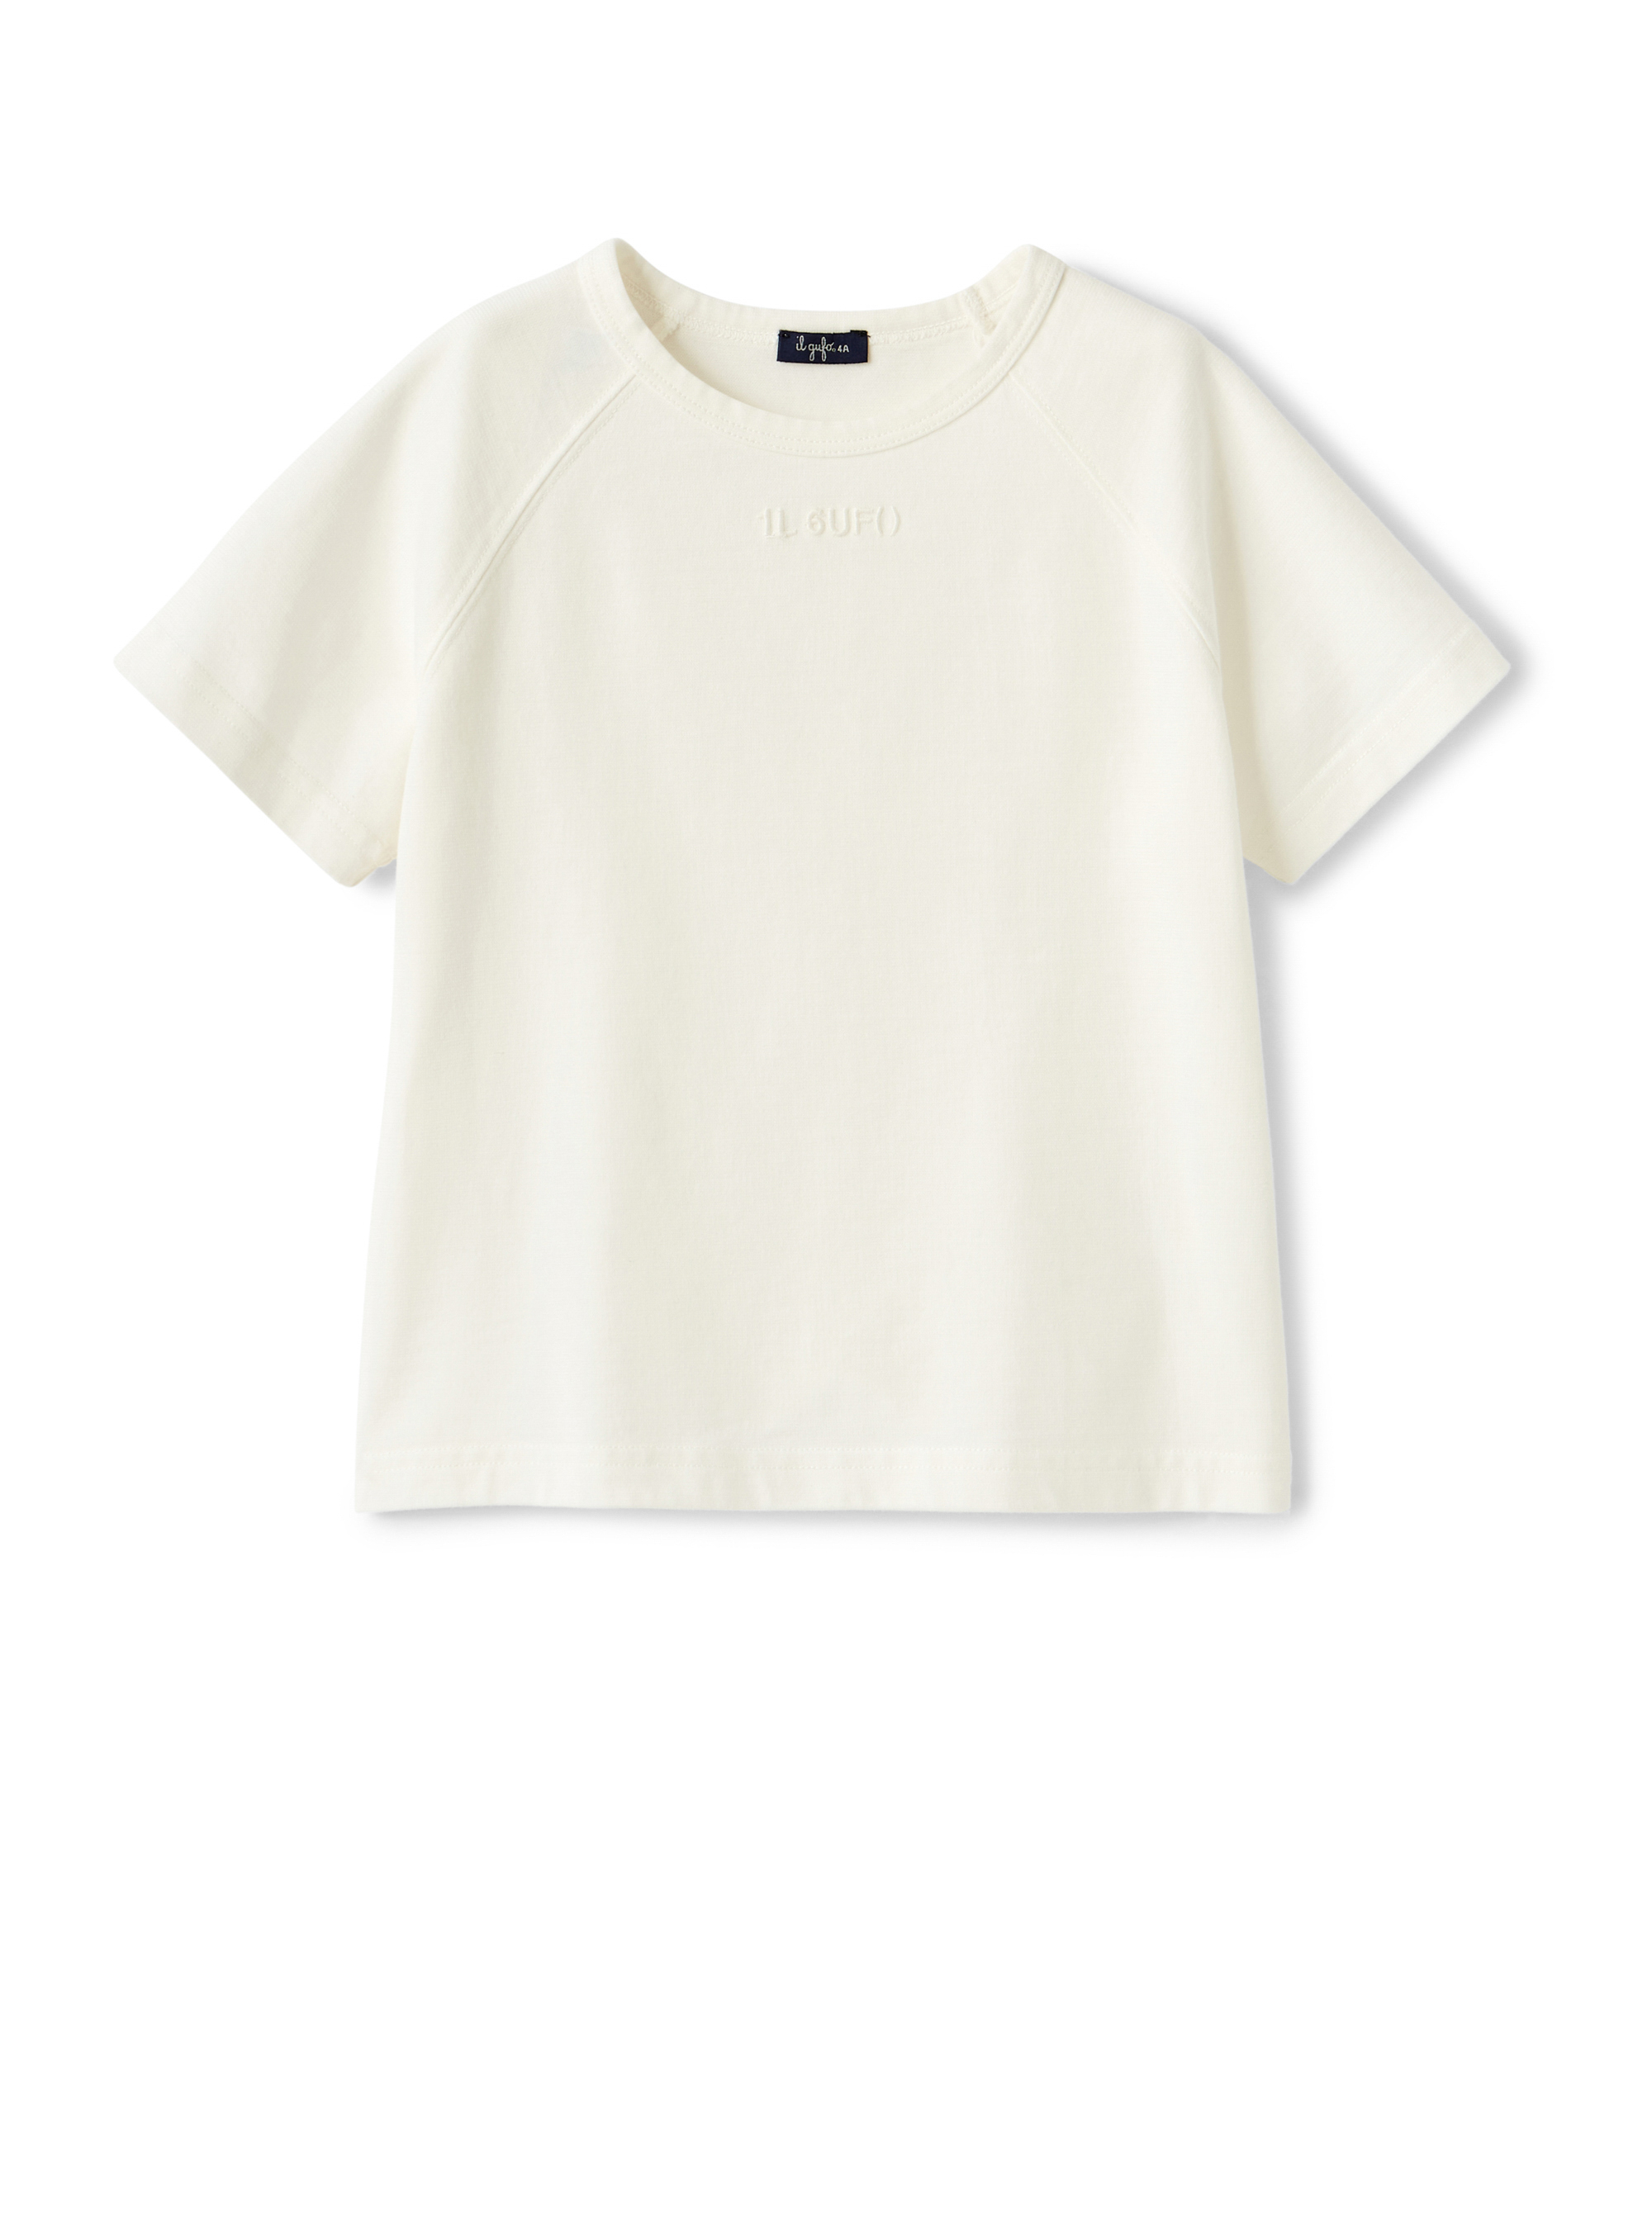 Heavy jersey white t-shirt - T-shirts - Il Gufo